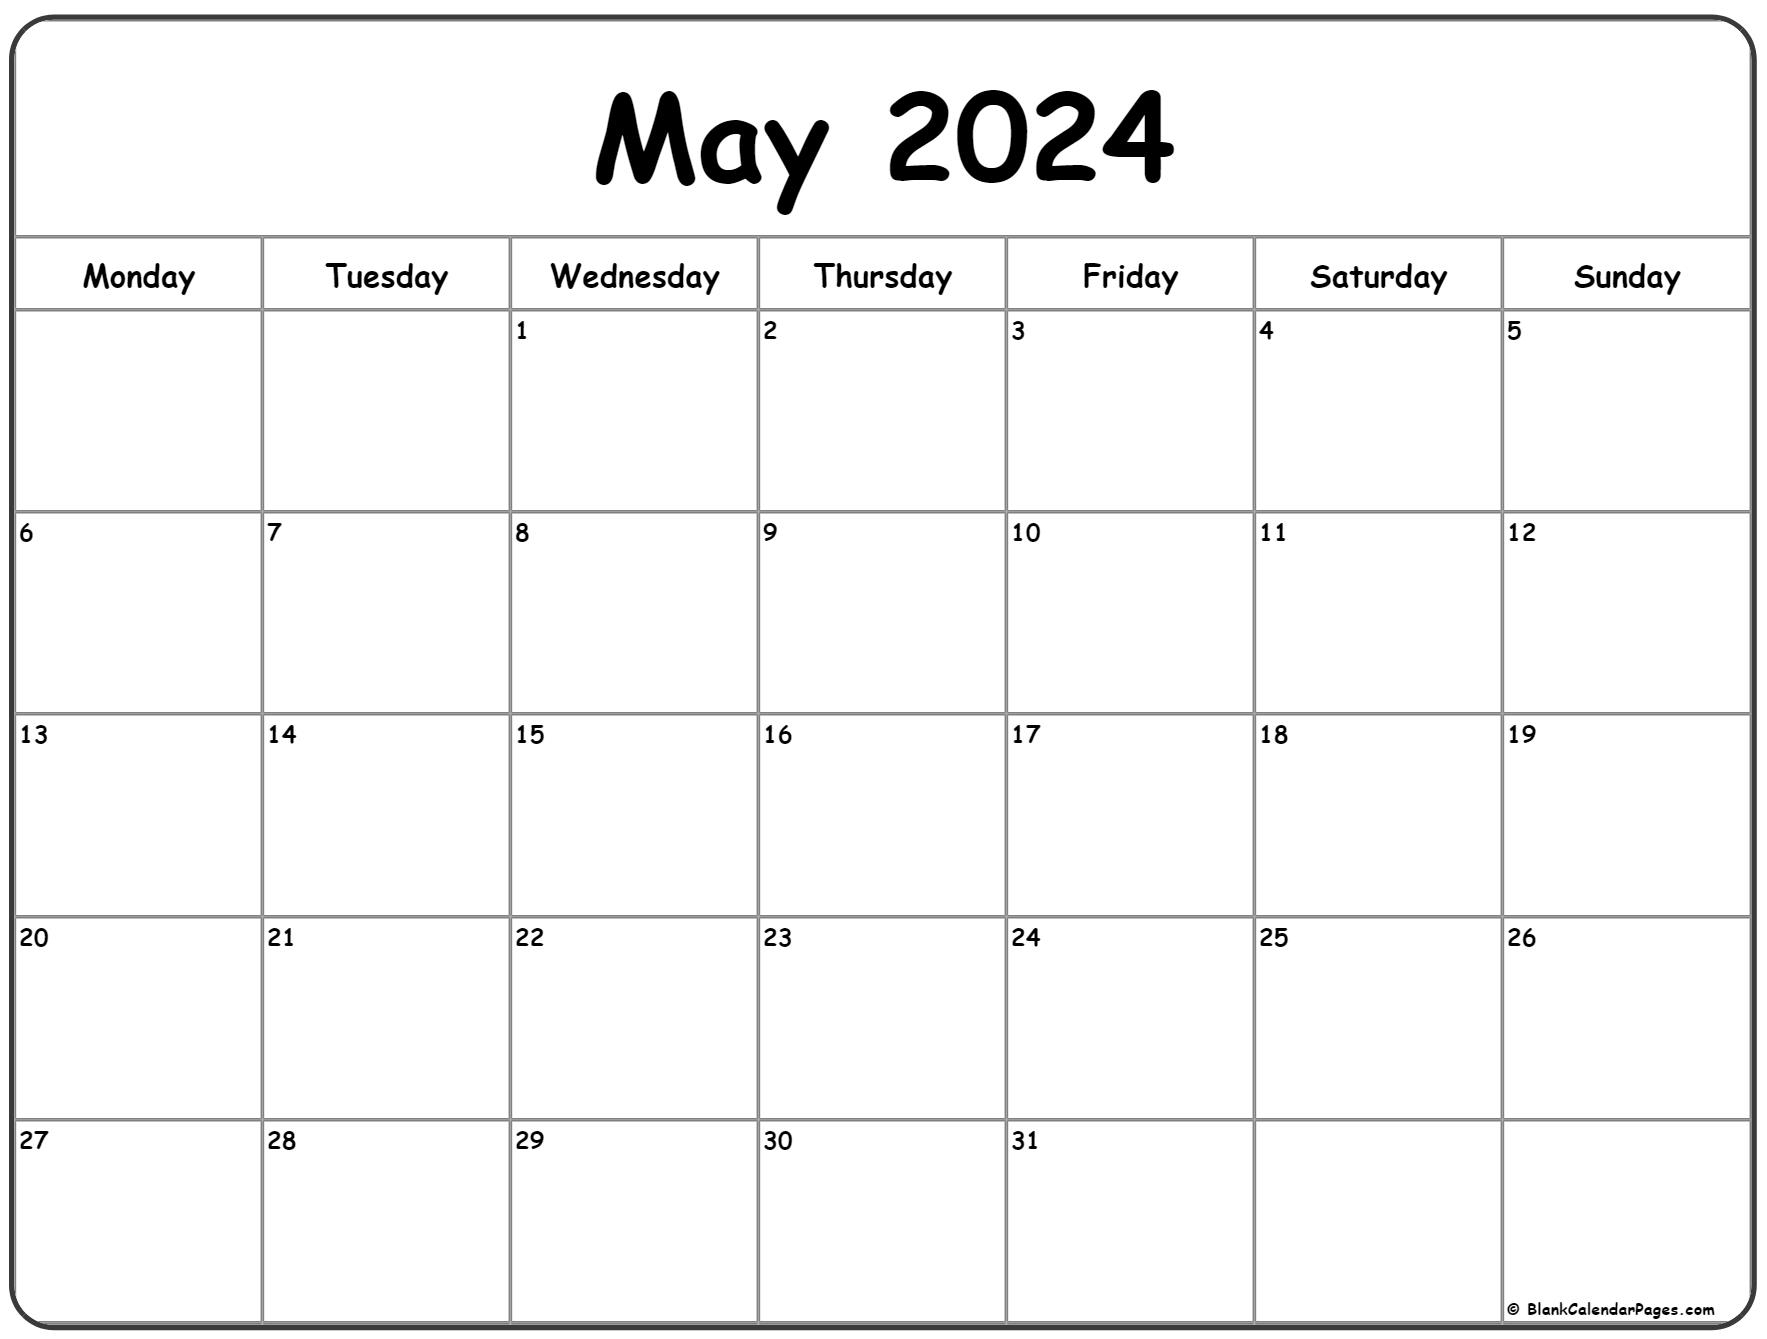 May 2024 Monday Calendar | Monday To Sunday for Calendar Printable May 2024